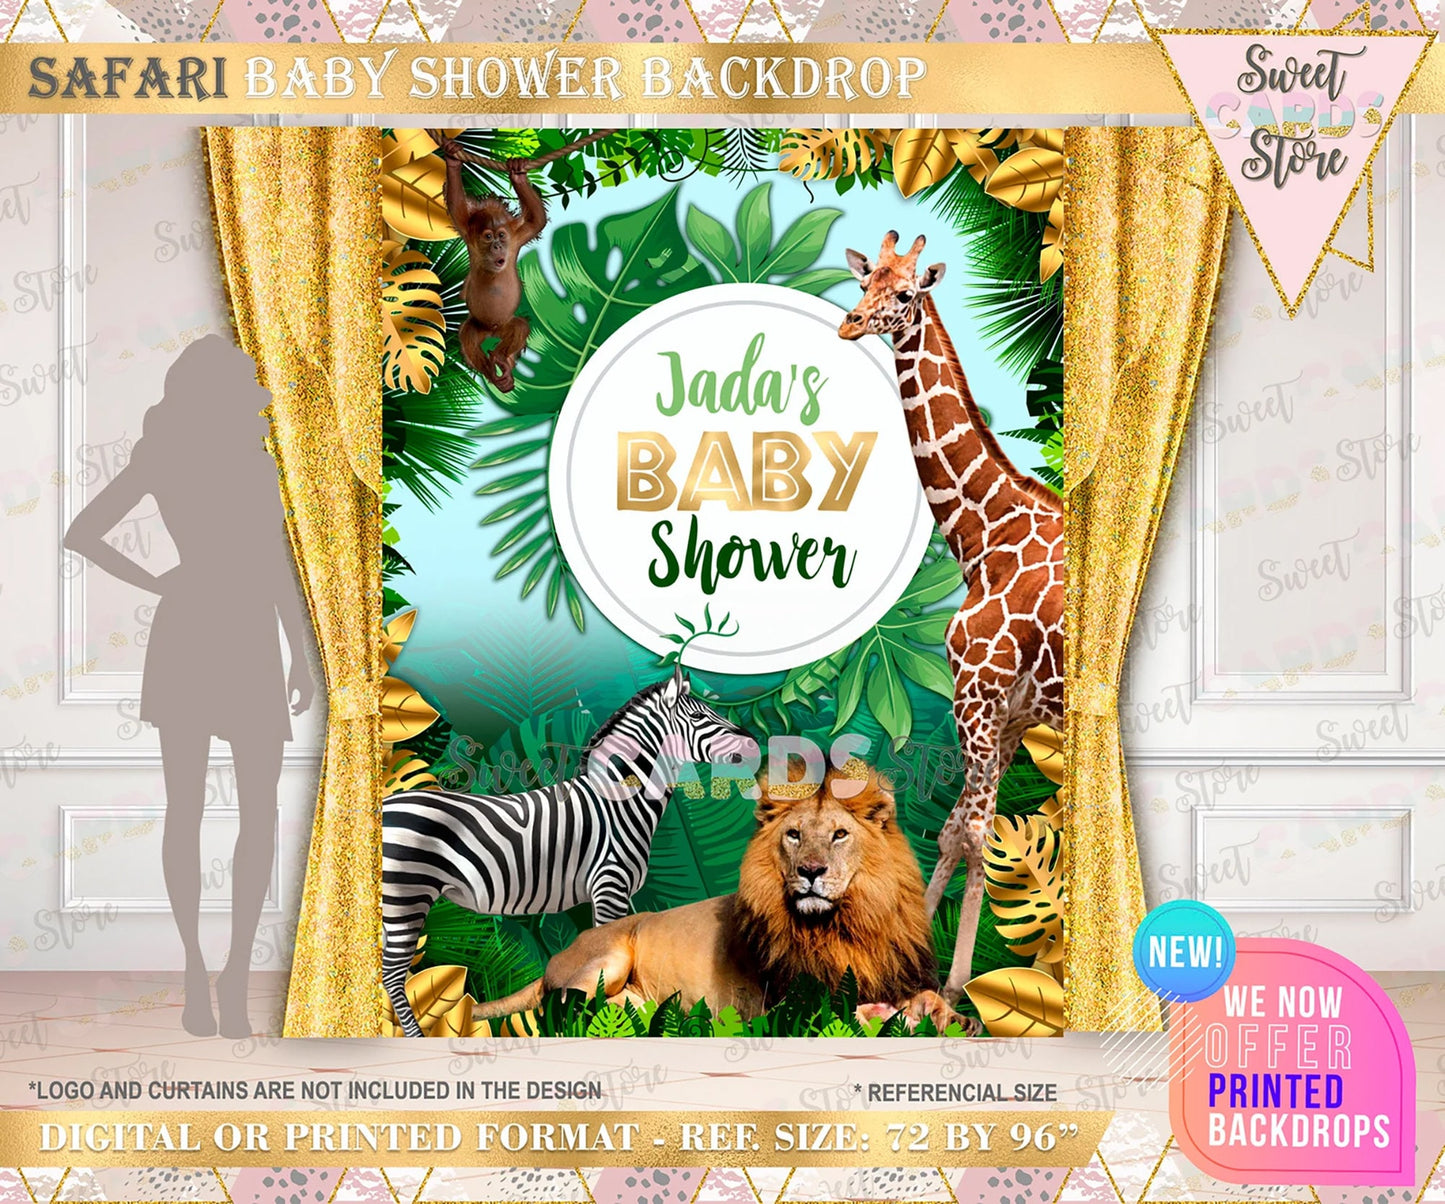 Jungle safari Printable Backdrop, Jungle animals Theme baby shower backdrop, Jungle Birthday Party, Wild One jungle backdrop, Jungle Banner